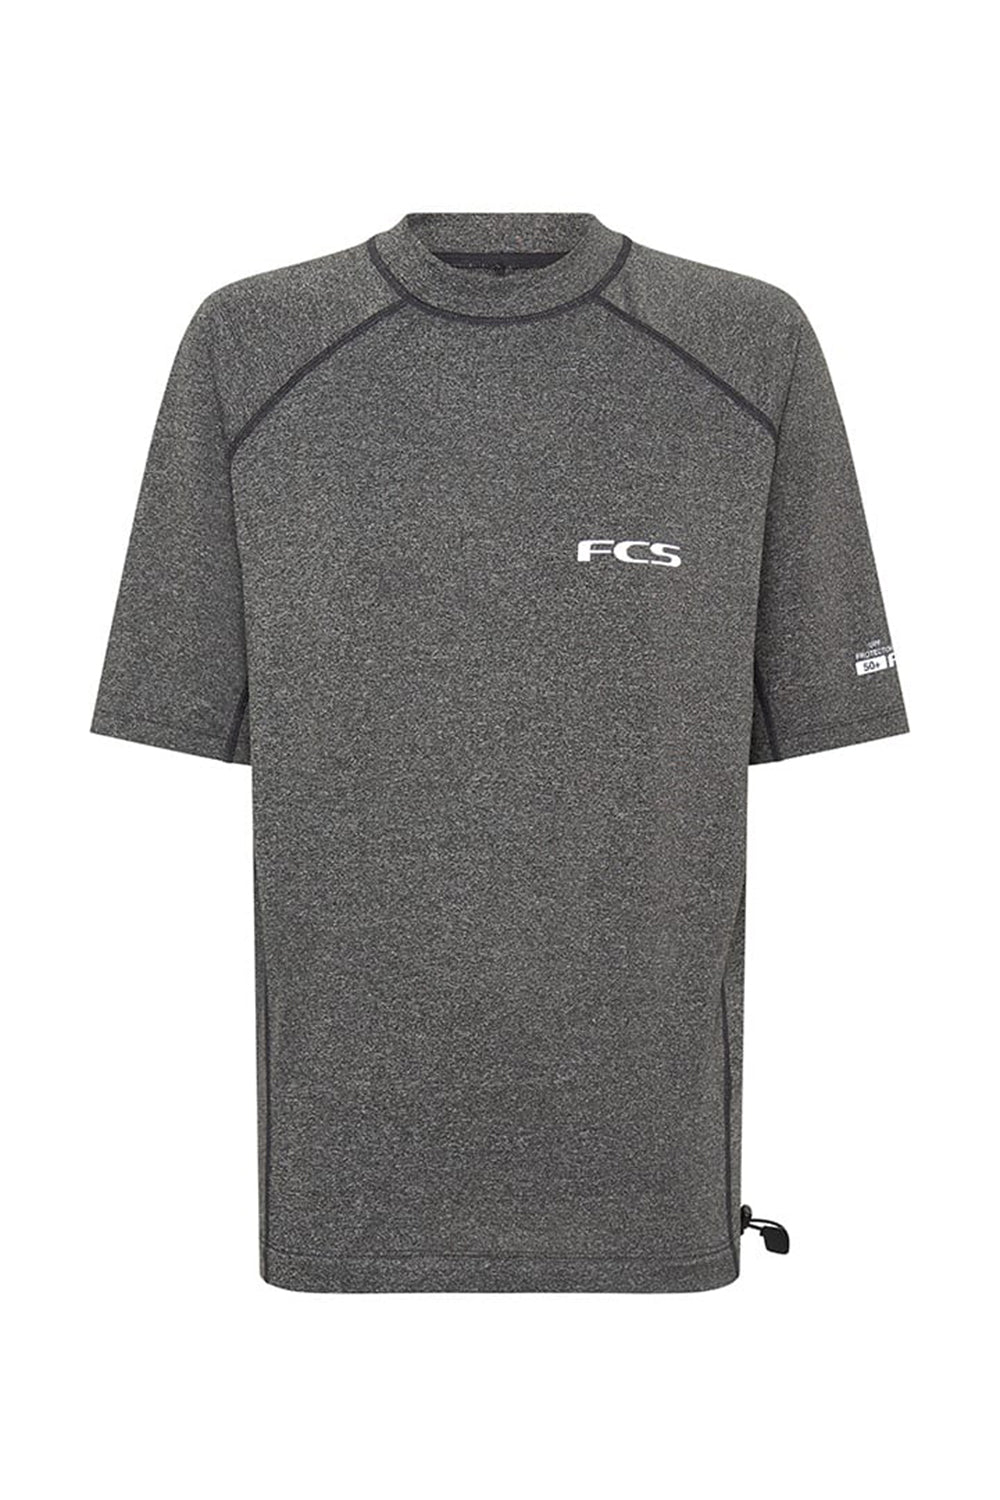 FCS Mens Essential Short Sleeve Rash Vest